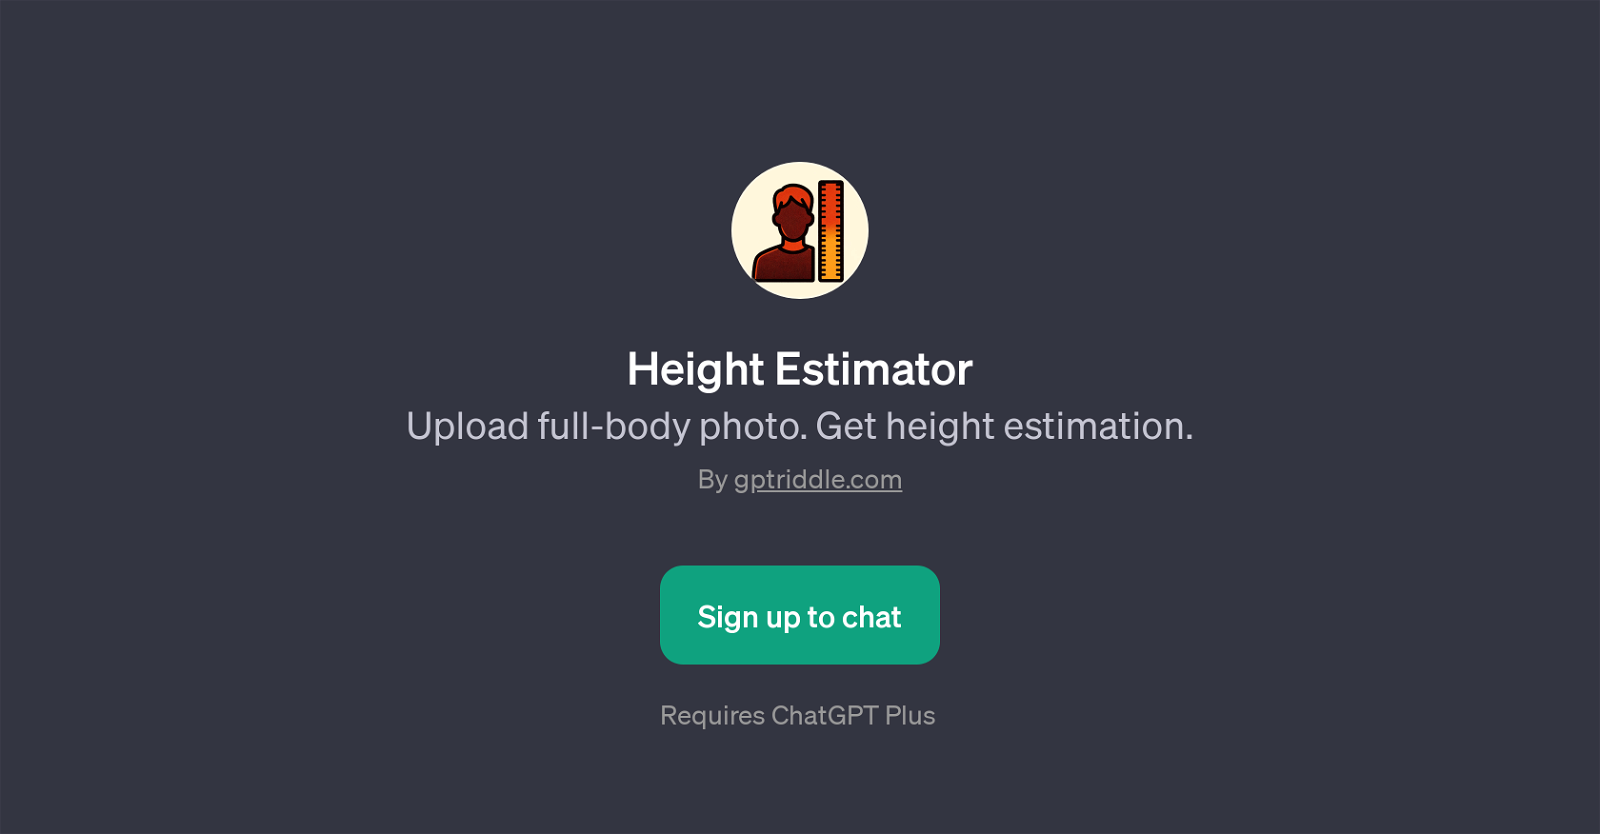 Height Estimator website